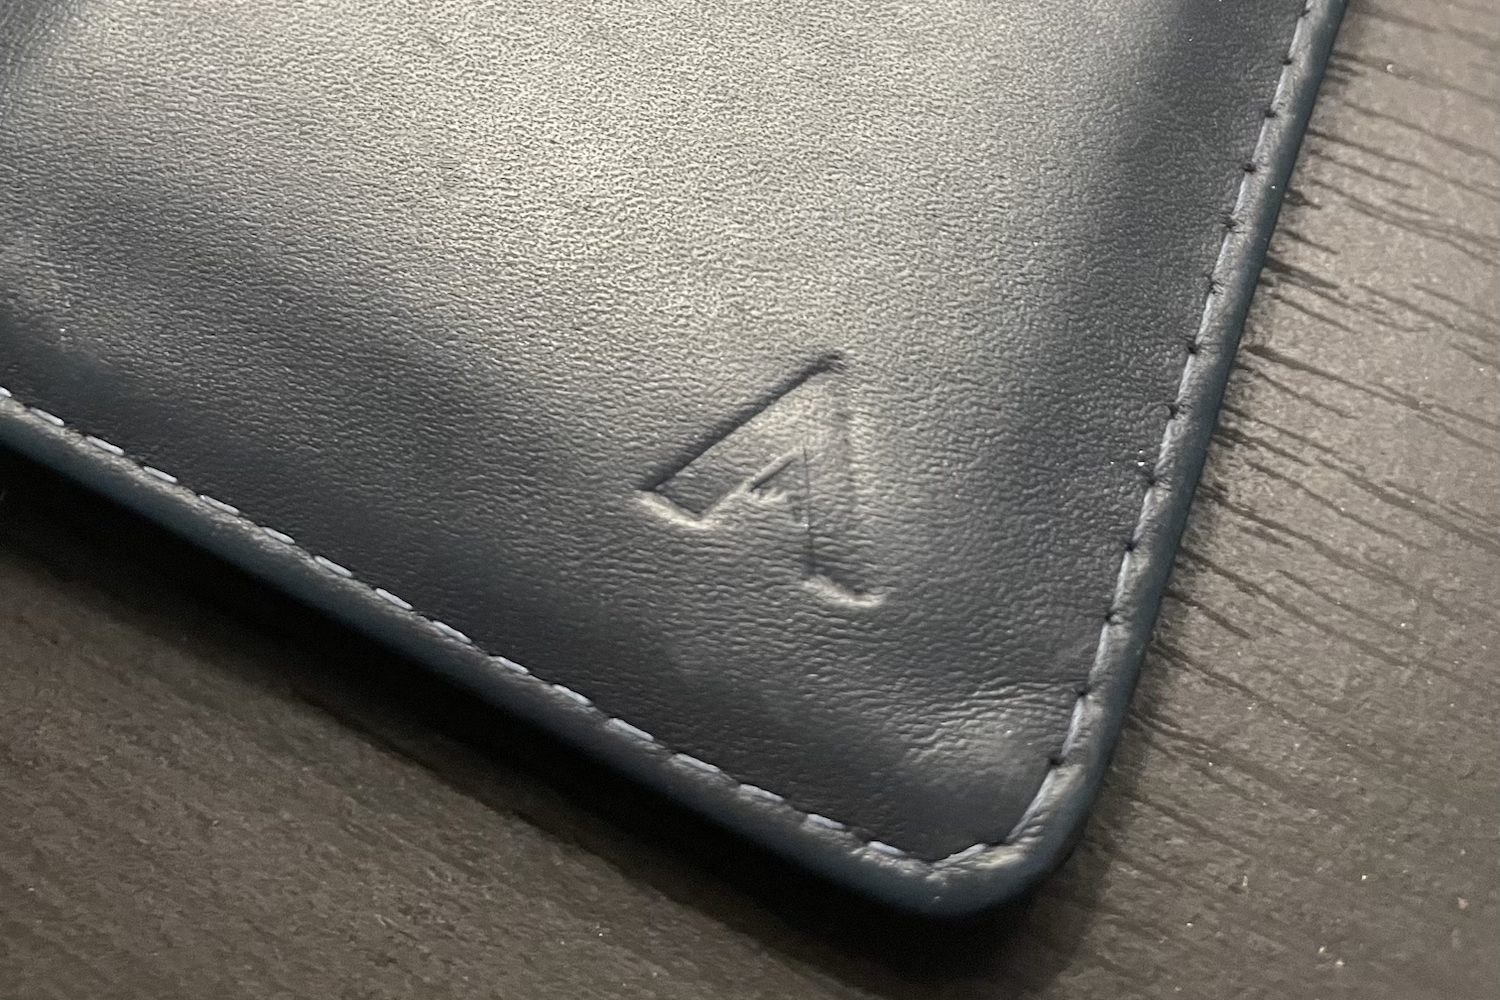 Patina on the Allett midnight blue Nappa leather Hybrid Card Wallet